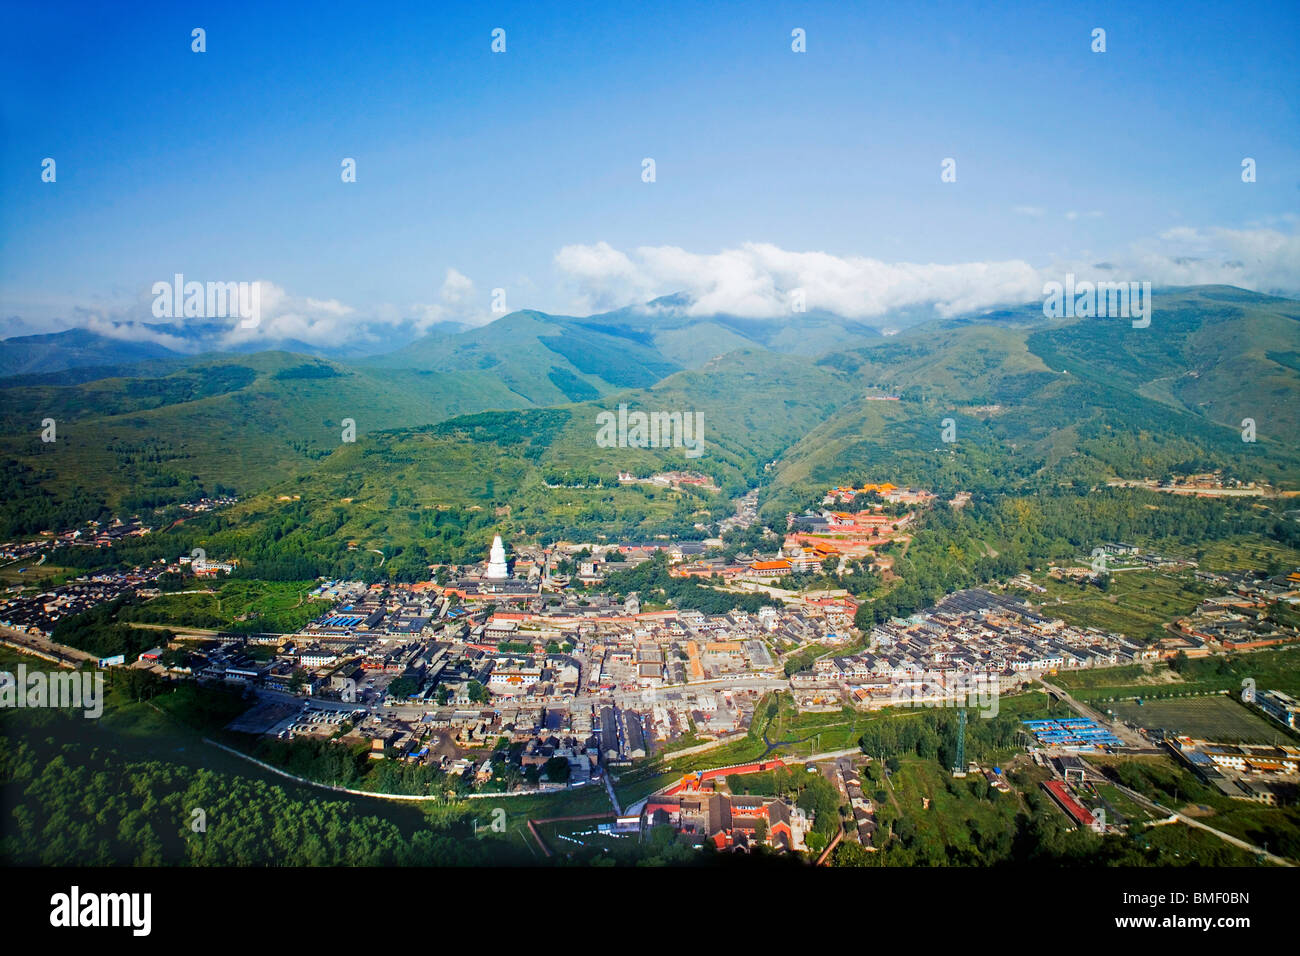 Aerial view of Mount Wutai, Xinzhou, Shanxi Province, China Stock Photo